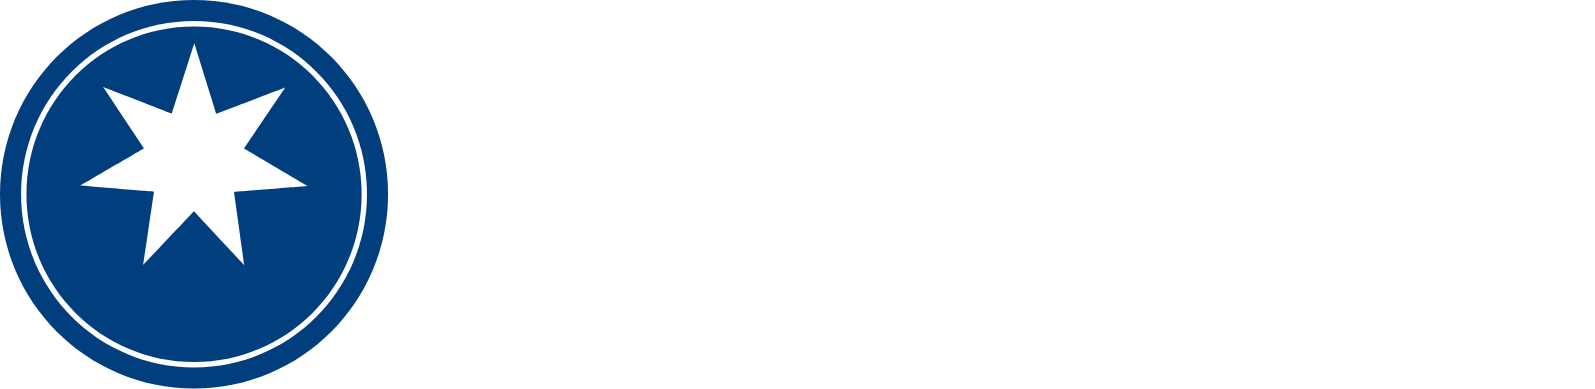 Magellan Financial Group Logo groß für dunkle Hintergründe (transparentes PNG)